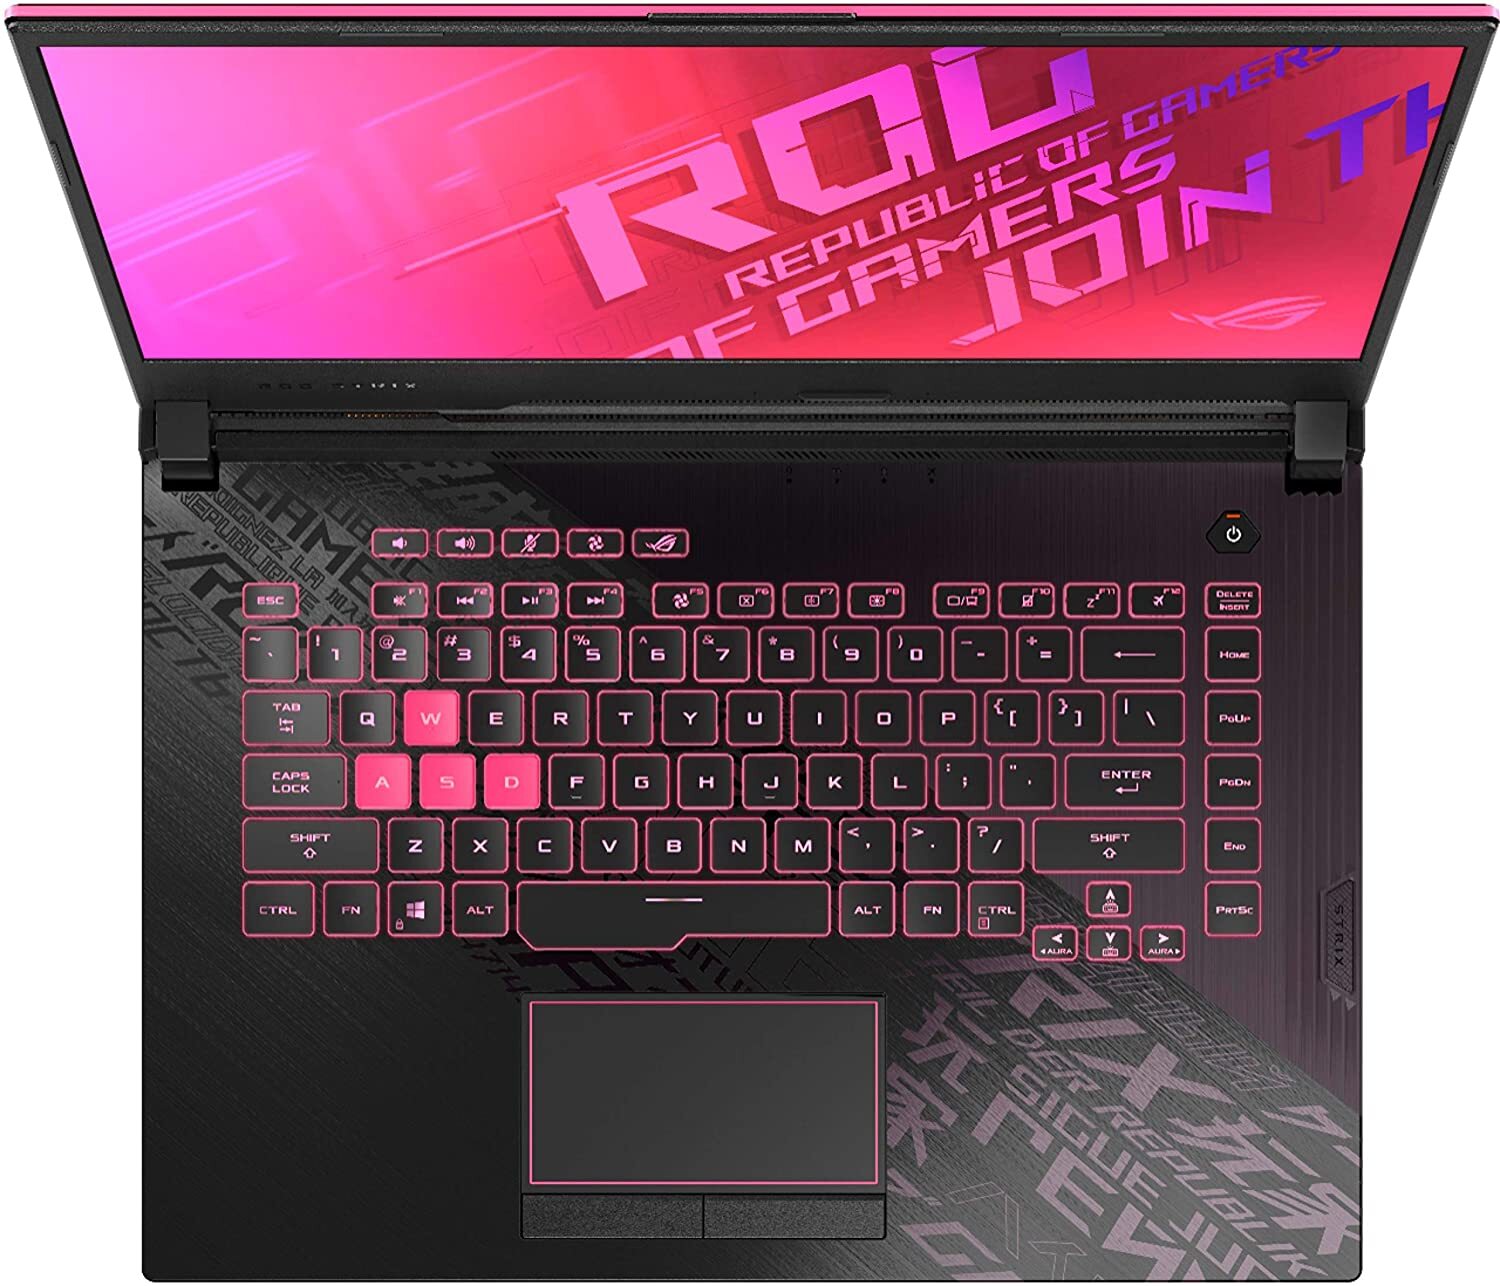 Asus Gaming Laptop ROG Strix G15 i7-10750H(8 Gb Ram,1T SSD,15.6 FHD-144hz,GTX1650Ti-4GB,RGB Backlit,WIFI6,WIN10,,Electro Punk),G512LI-HN179T